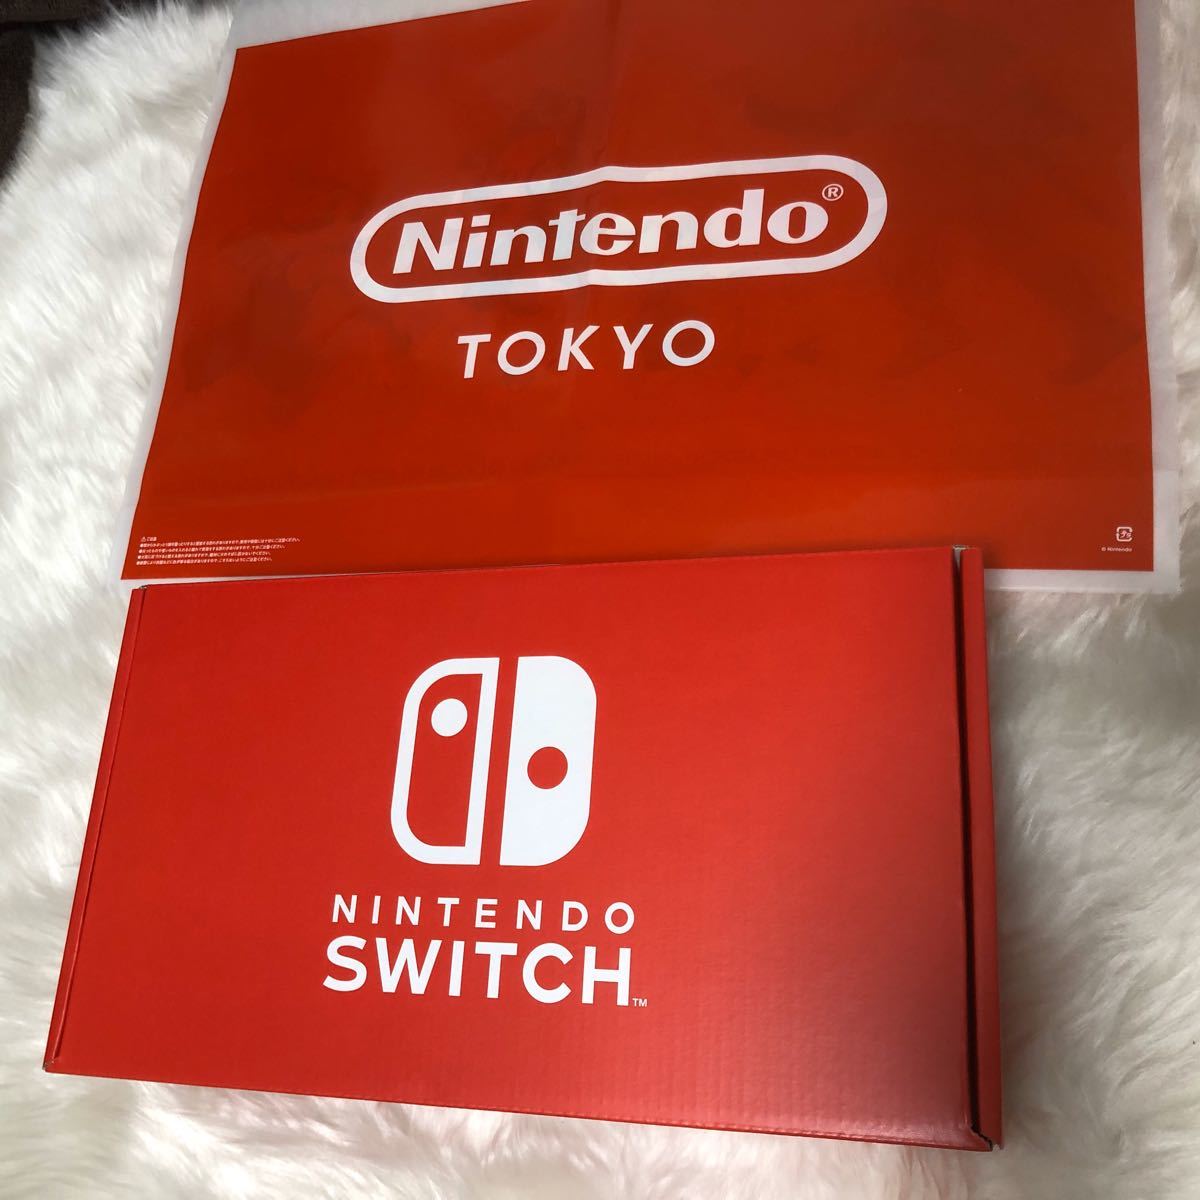 Nintendo Switch 本体 新品未使用 ニンテンドートーキョー限定